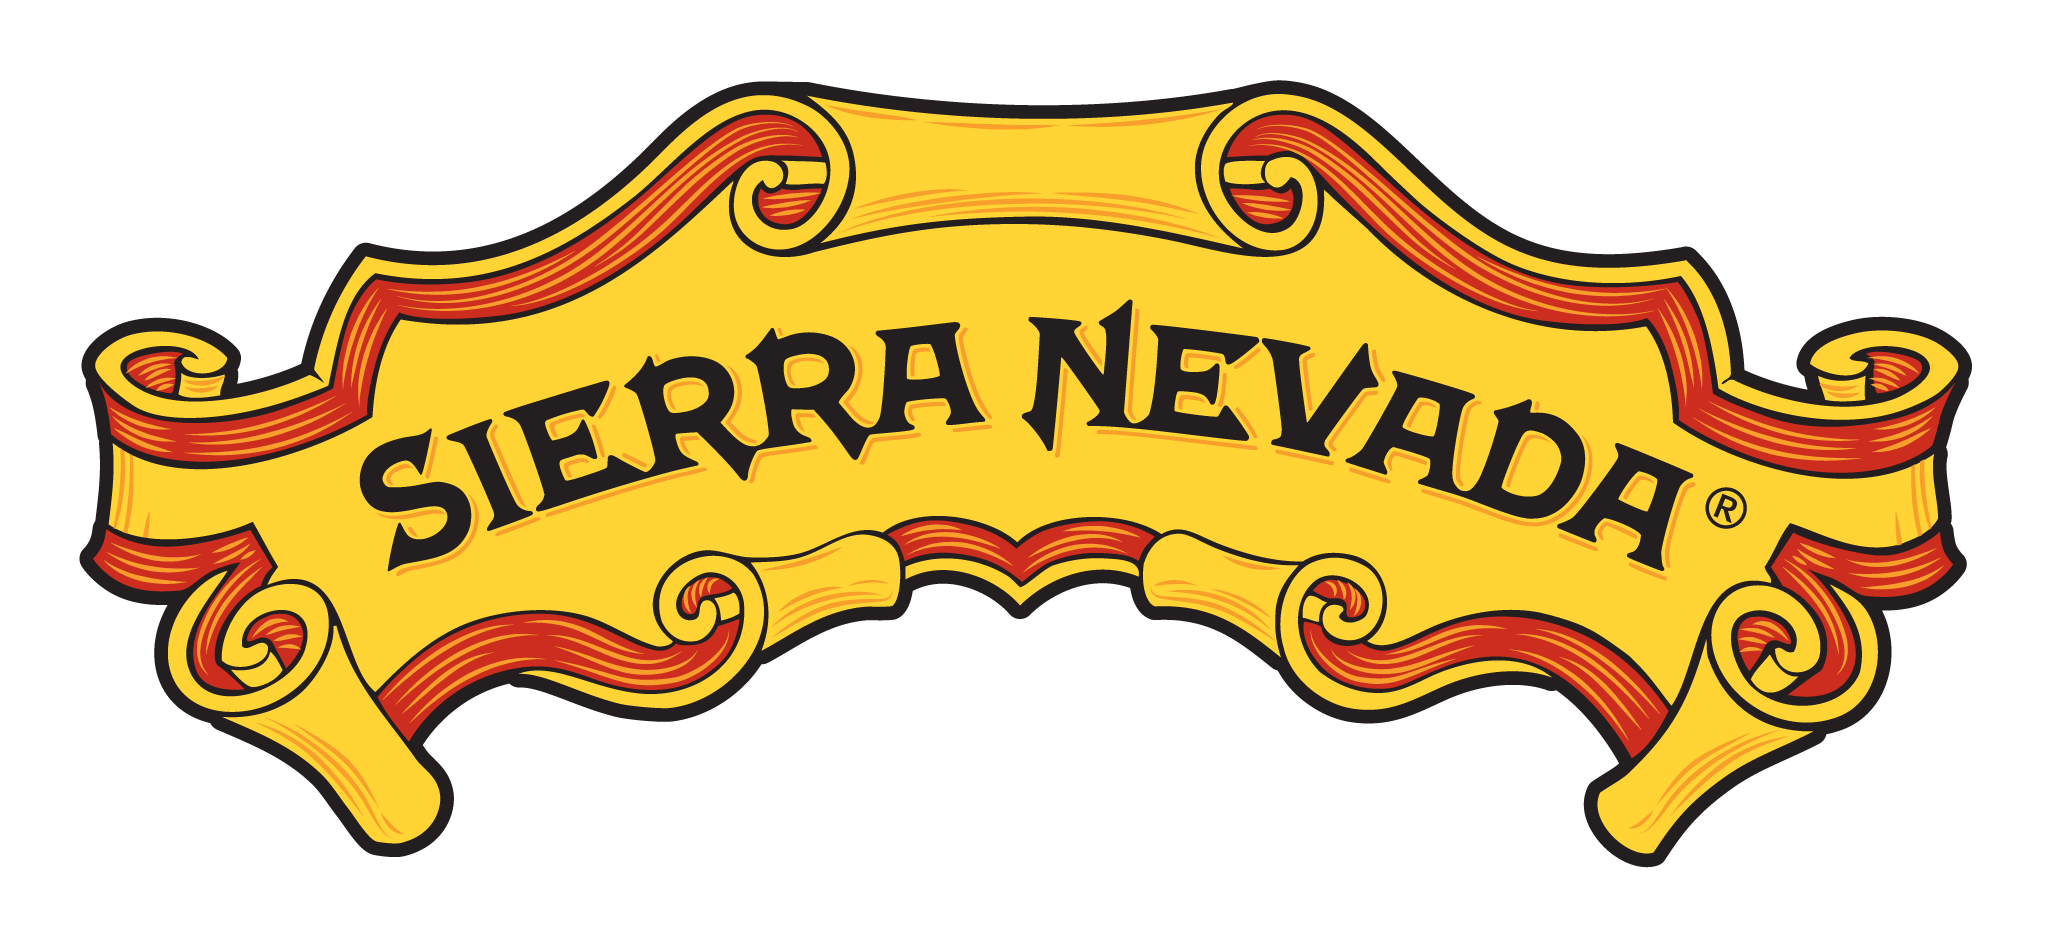 Sierra Nevada Brewing Co. sticker of the classic gold scroll logo and Sierra Nevada brand